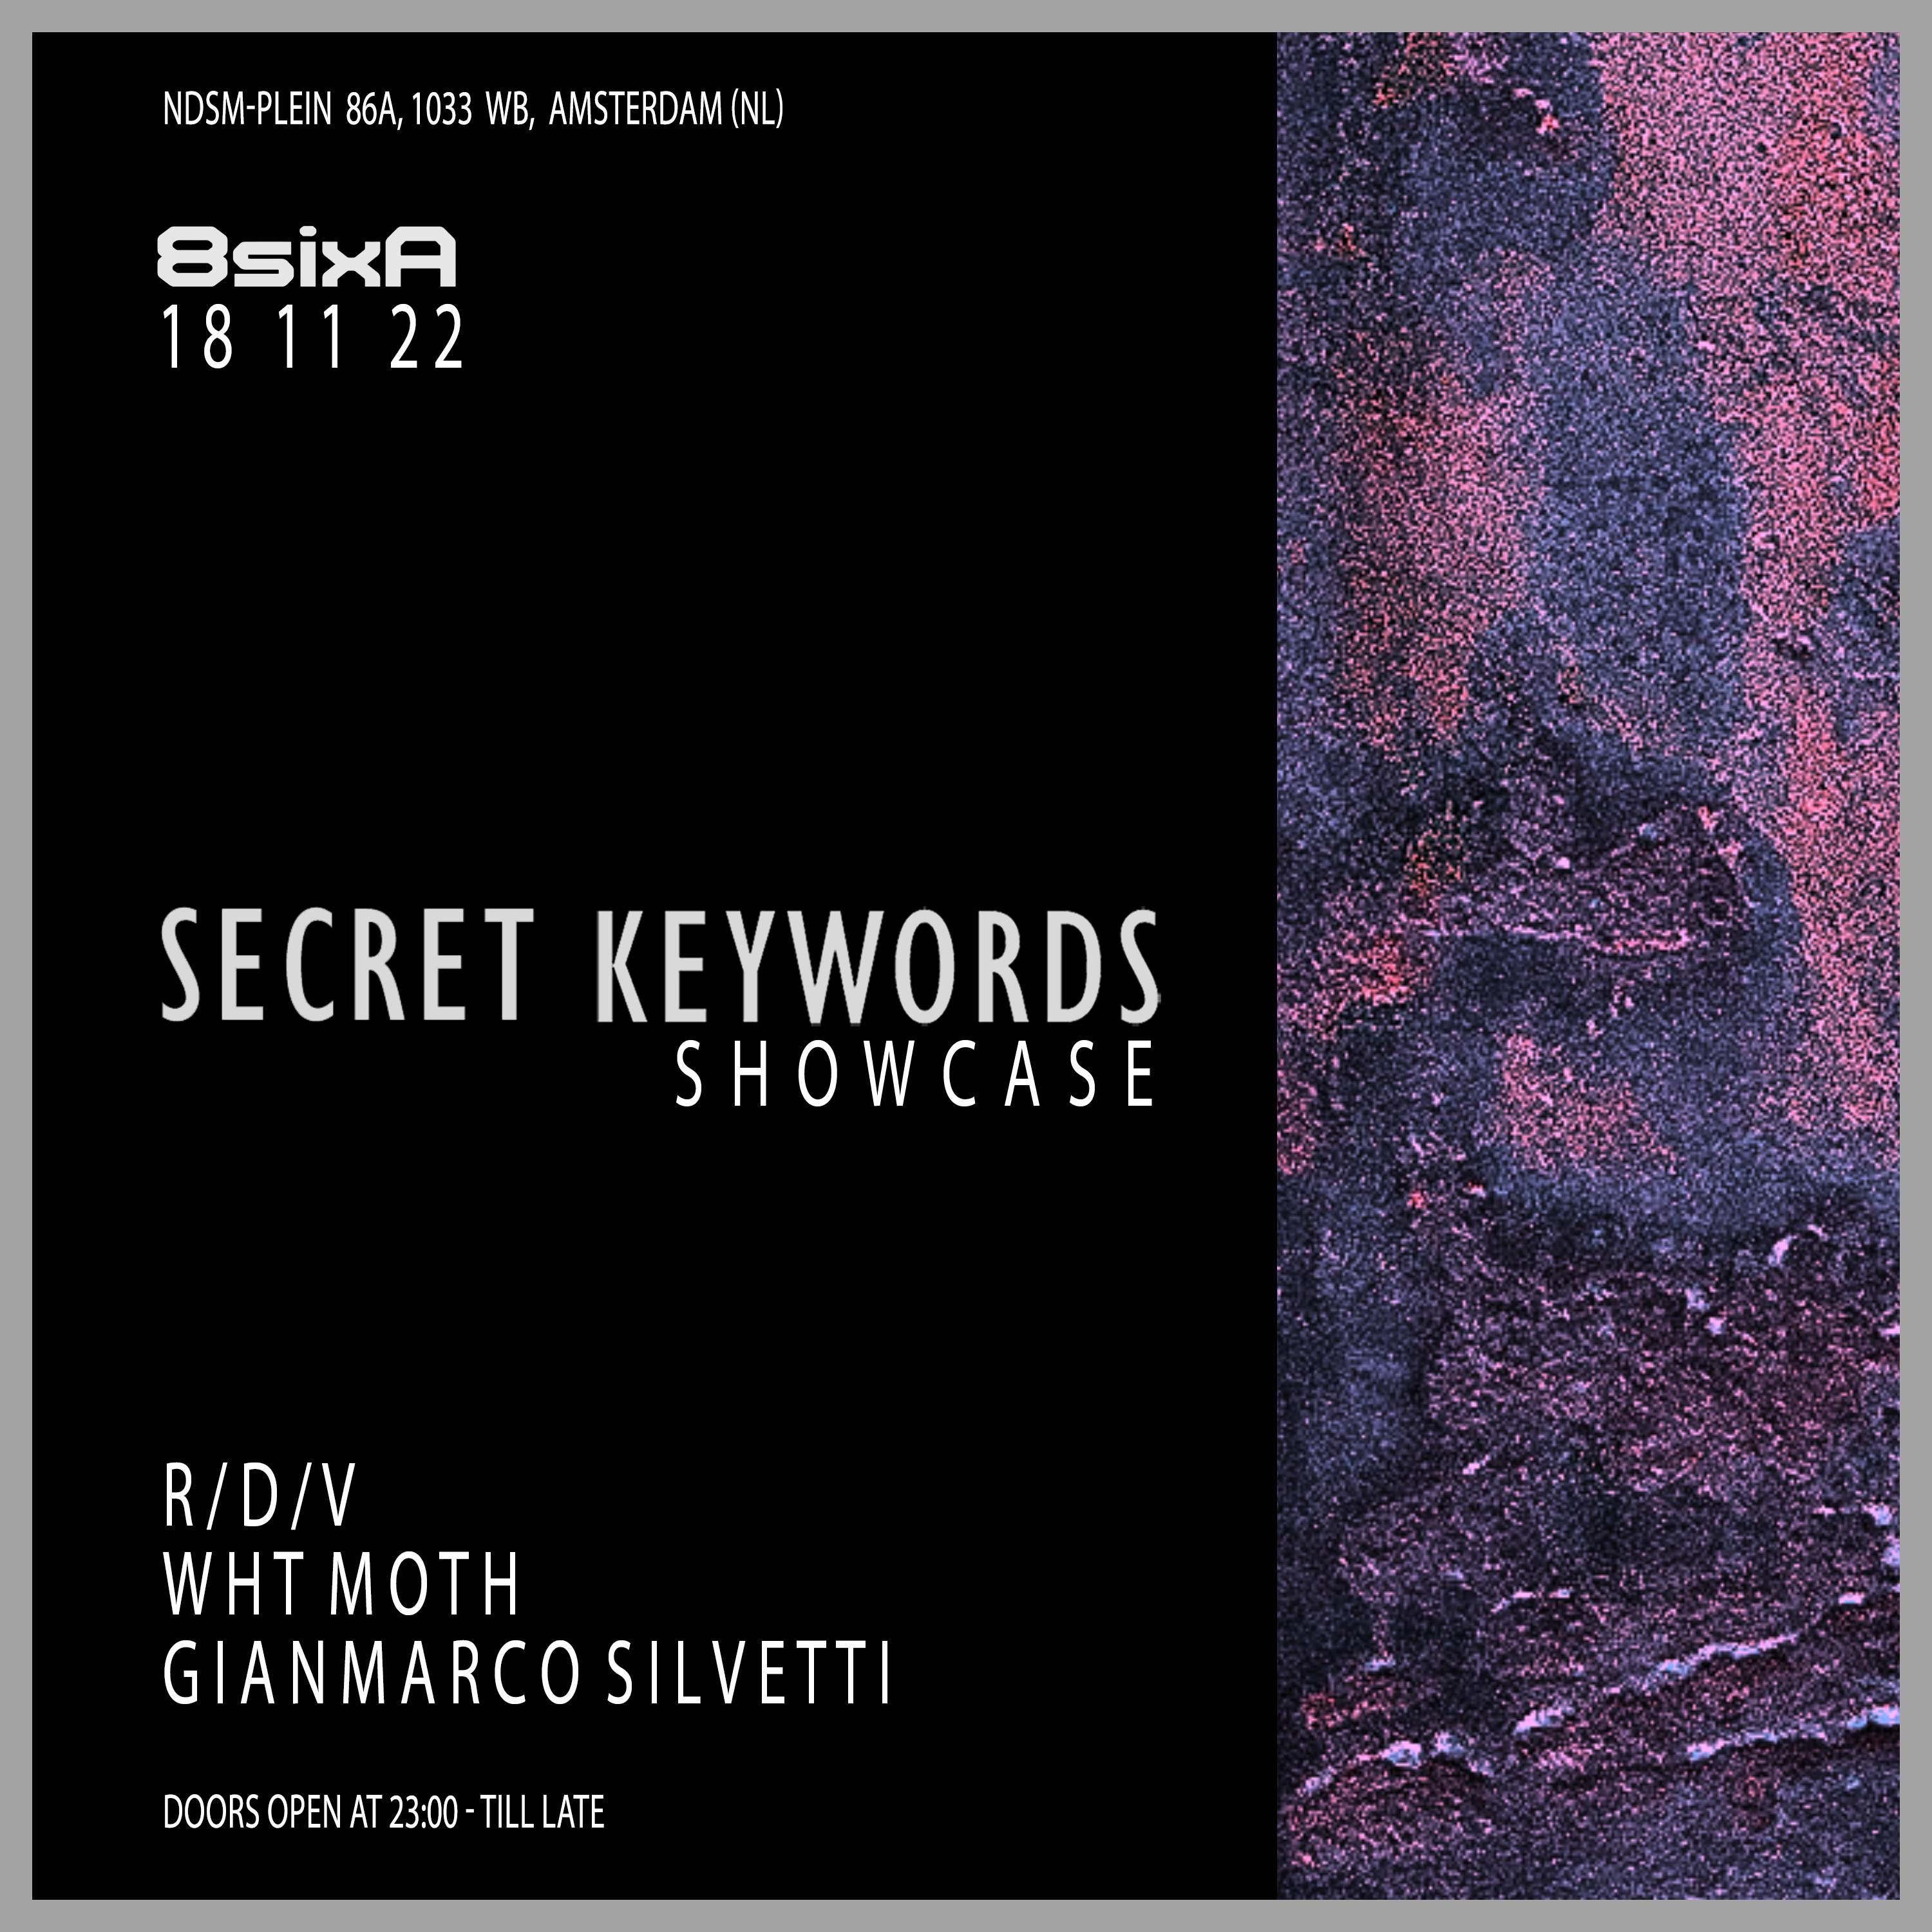 Secret Keywords Showcase at 8sixA - フライヤー表